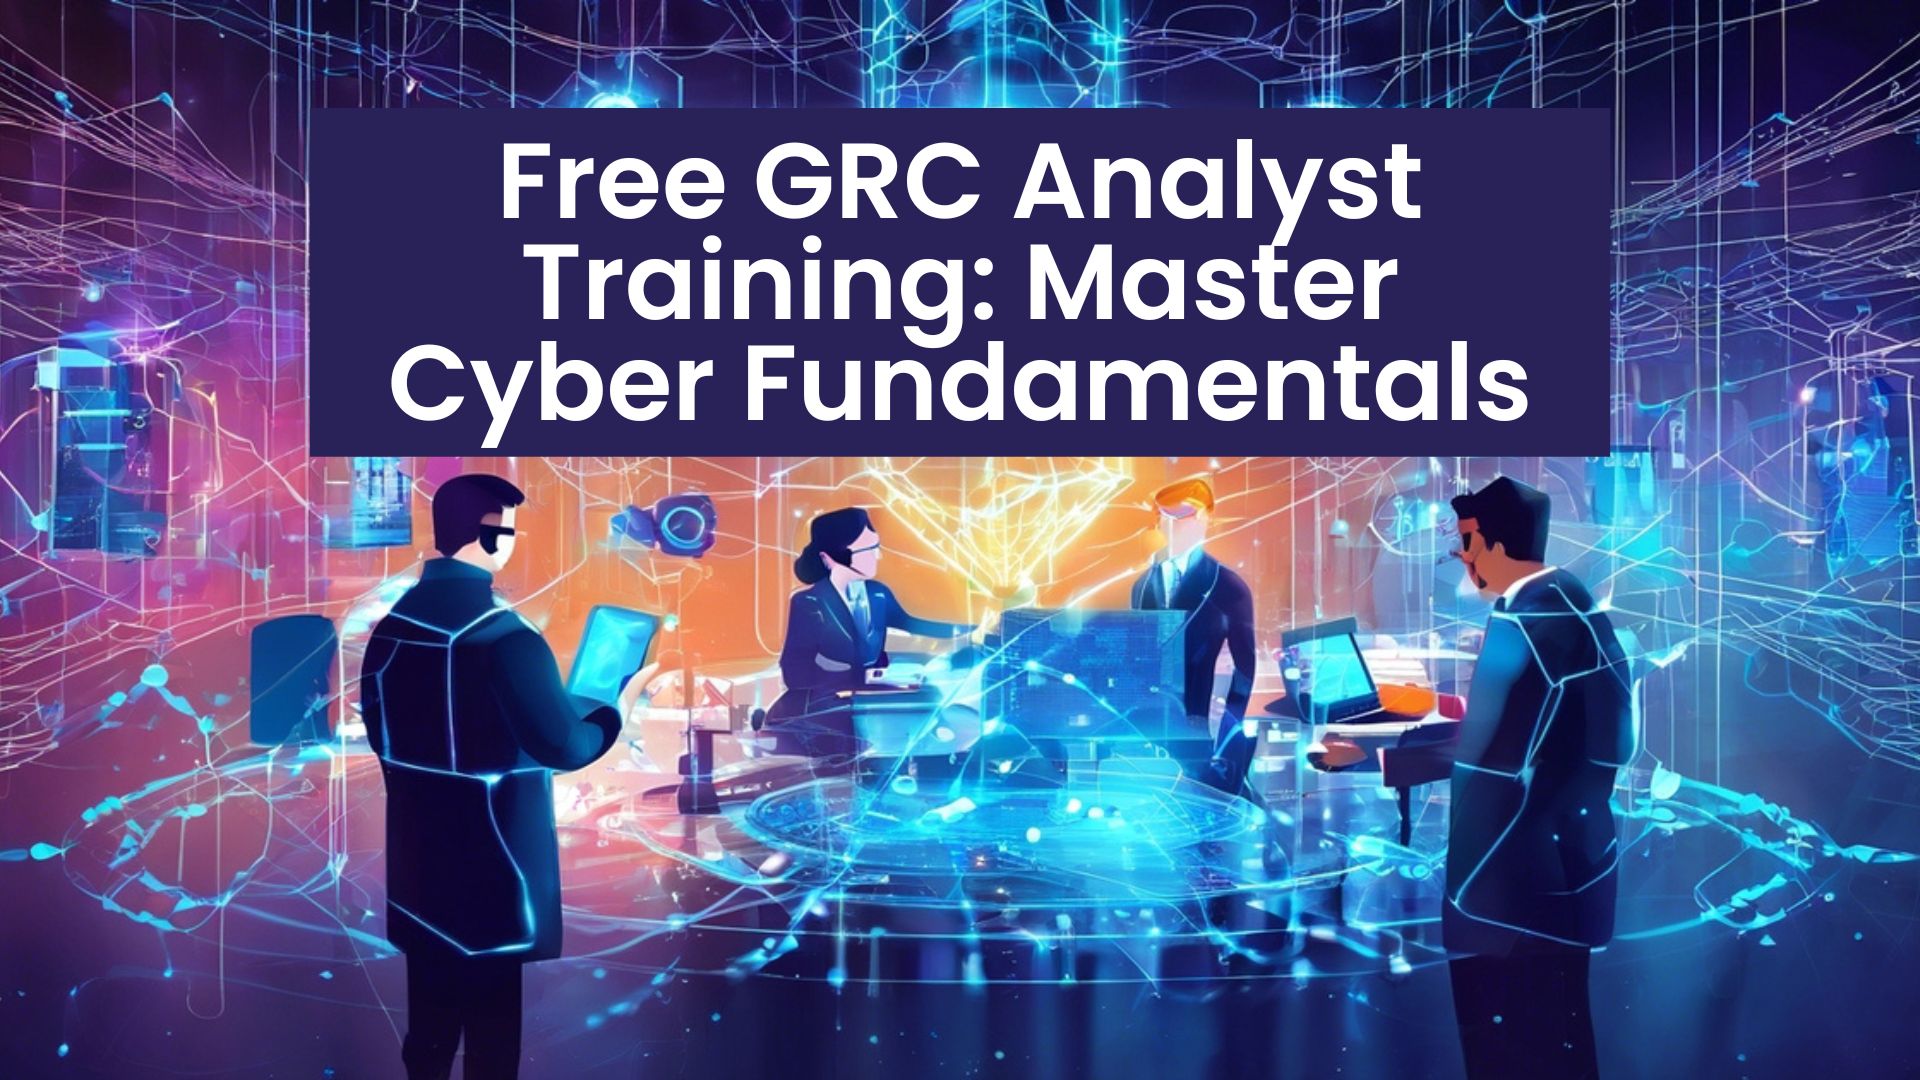 Free GRC Analyst Training Master Cyber Fundamentals